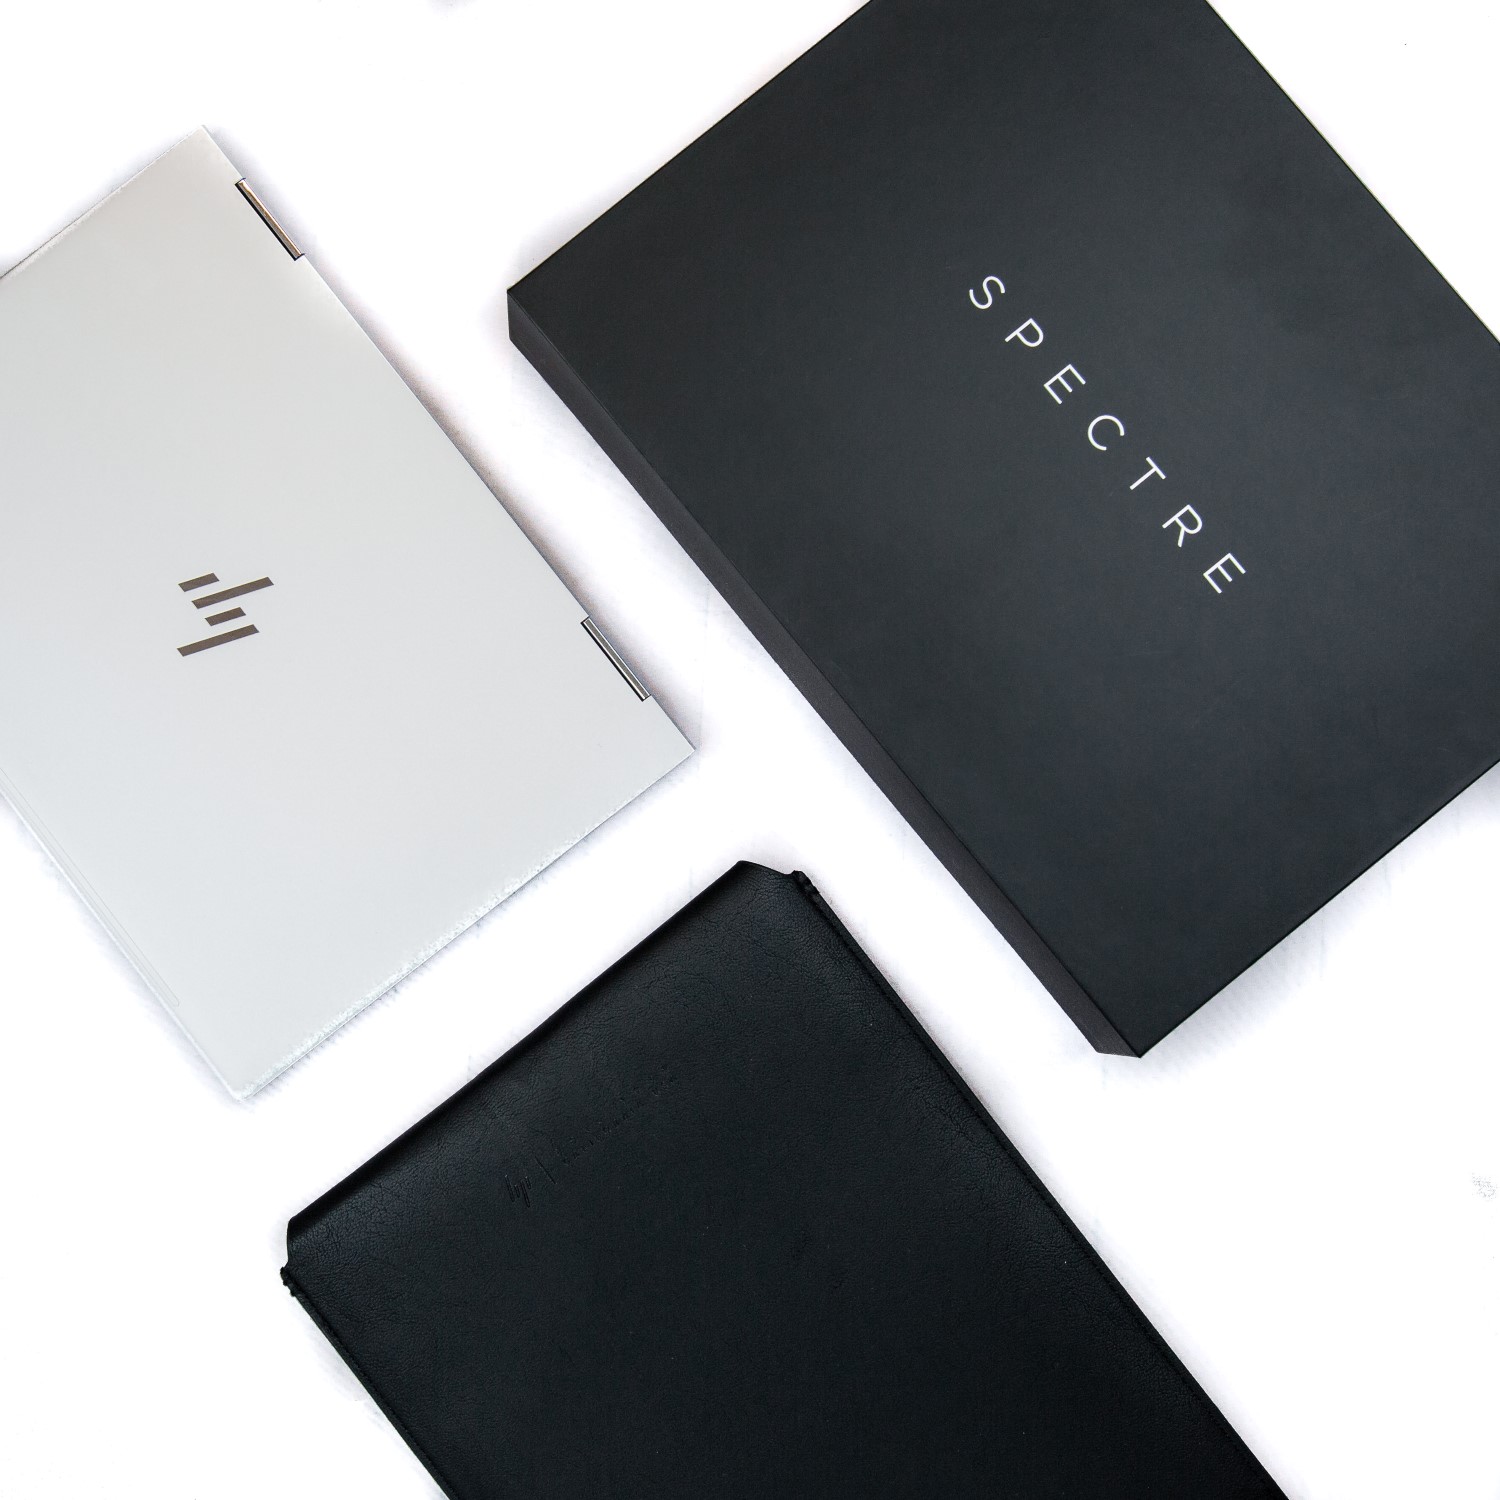 hp spectre x360 convertible laptop black leather box